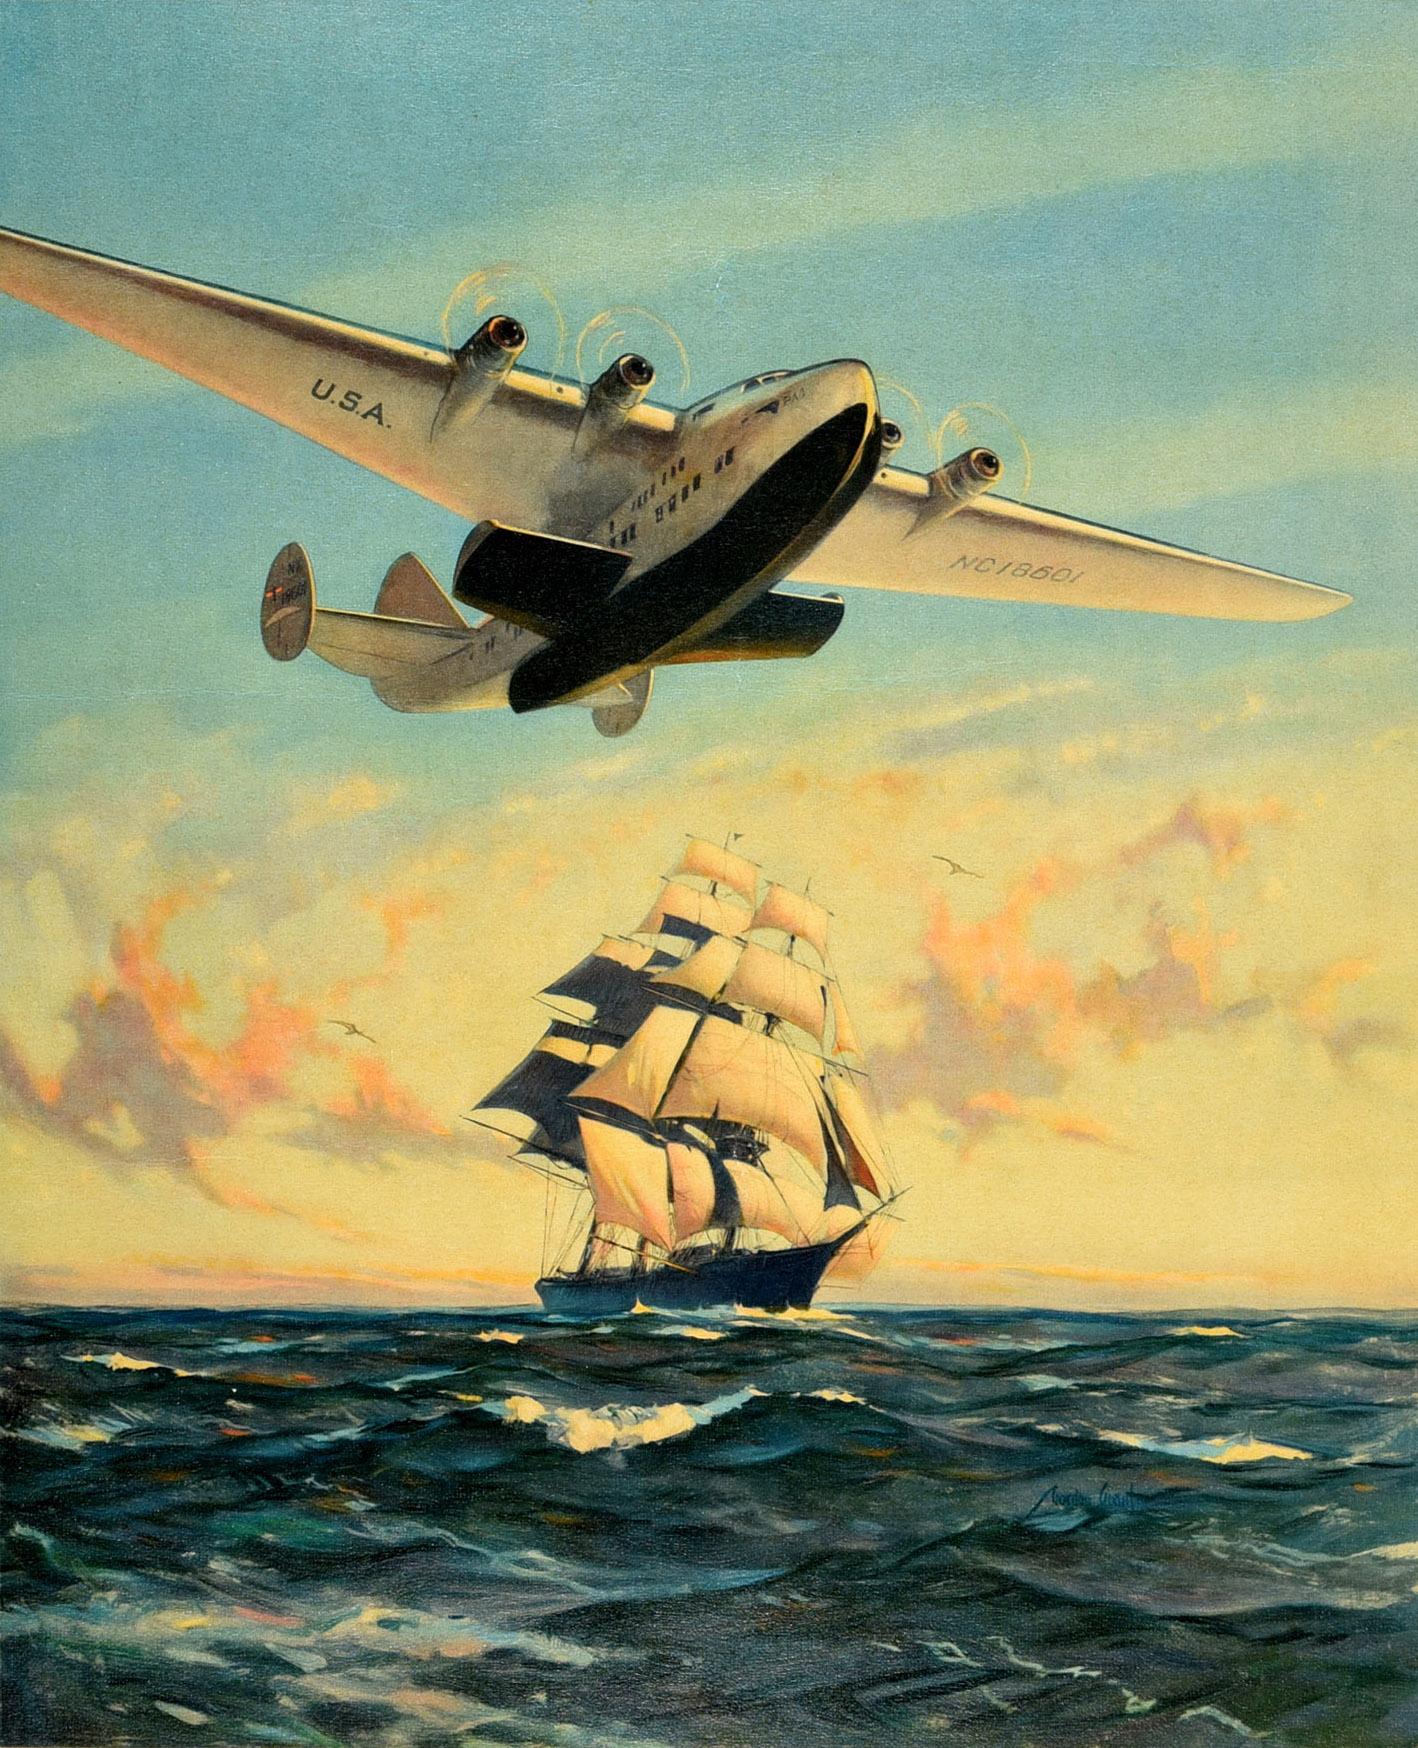 Original Vintage Travel Poster Yankee Clipper Flying Boat PanAm Pan American - Print by Gordon Grant 